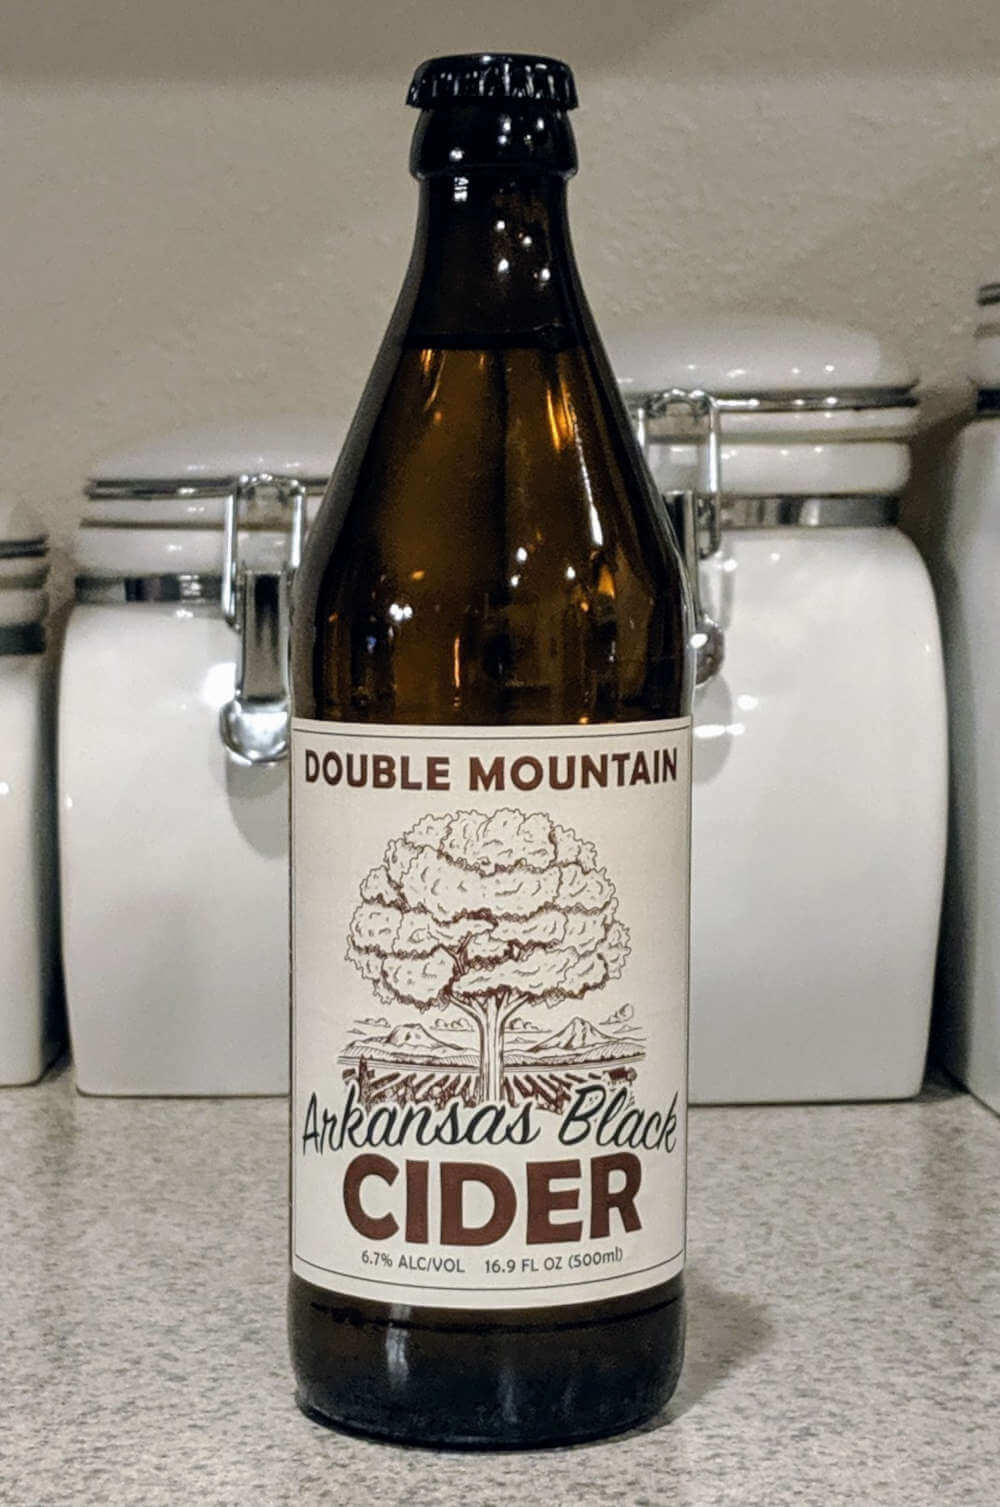 Received: Double Mountain Arkansas Black Cider